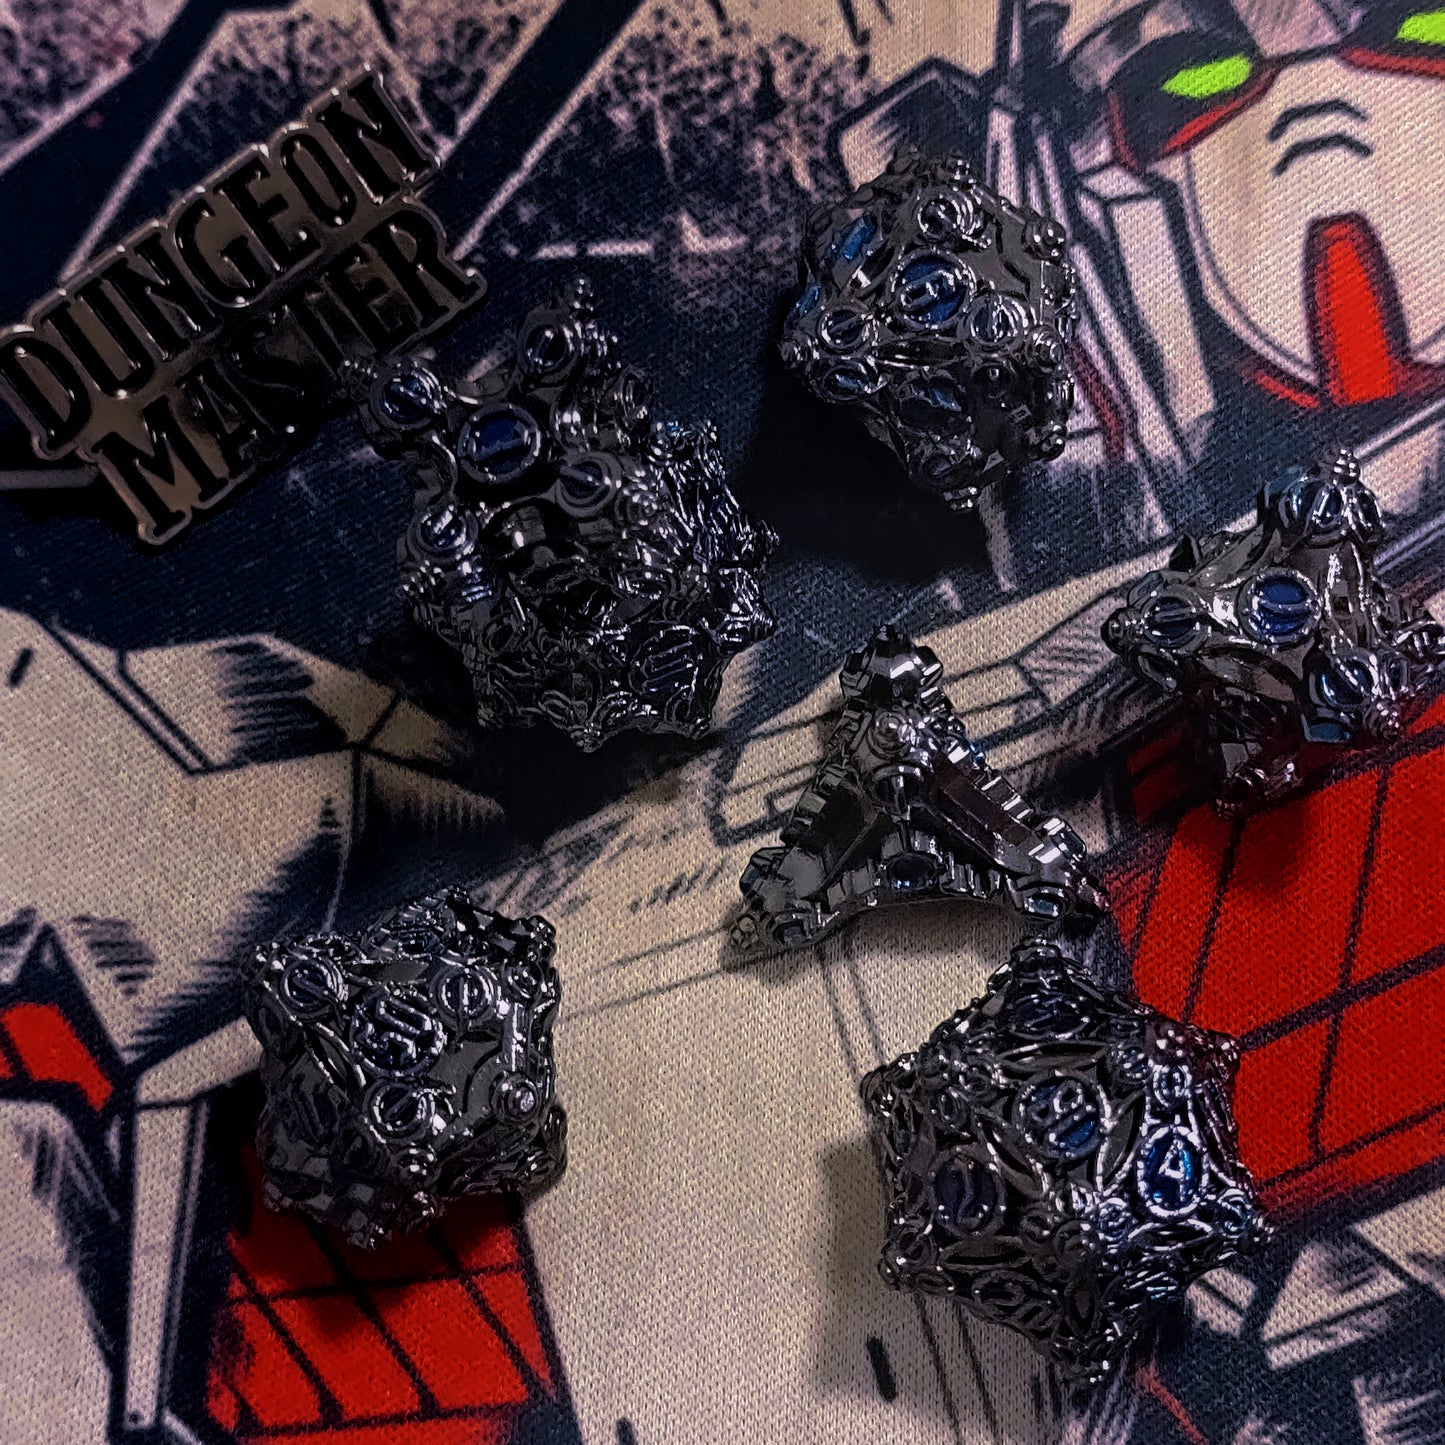 FREE Today: Dark Lord Engine Metal Dice (Give away a random dice set)